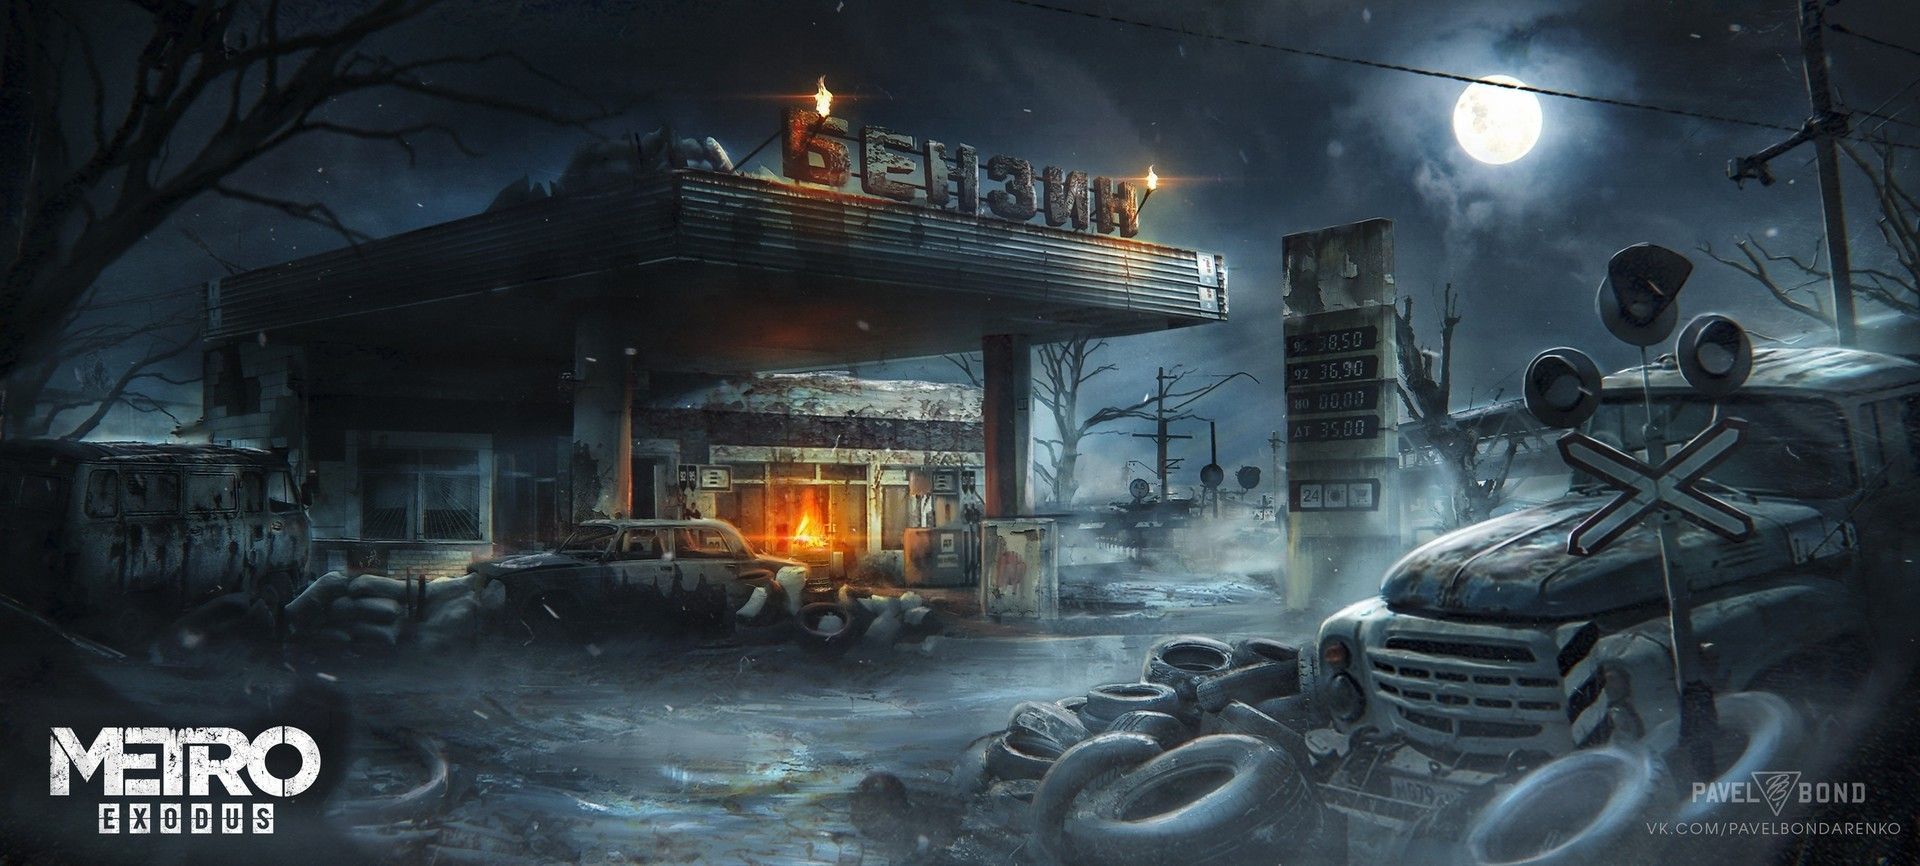 Free Download Metro Exodus 4k Wallpaper. Post apocalyptic city